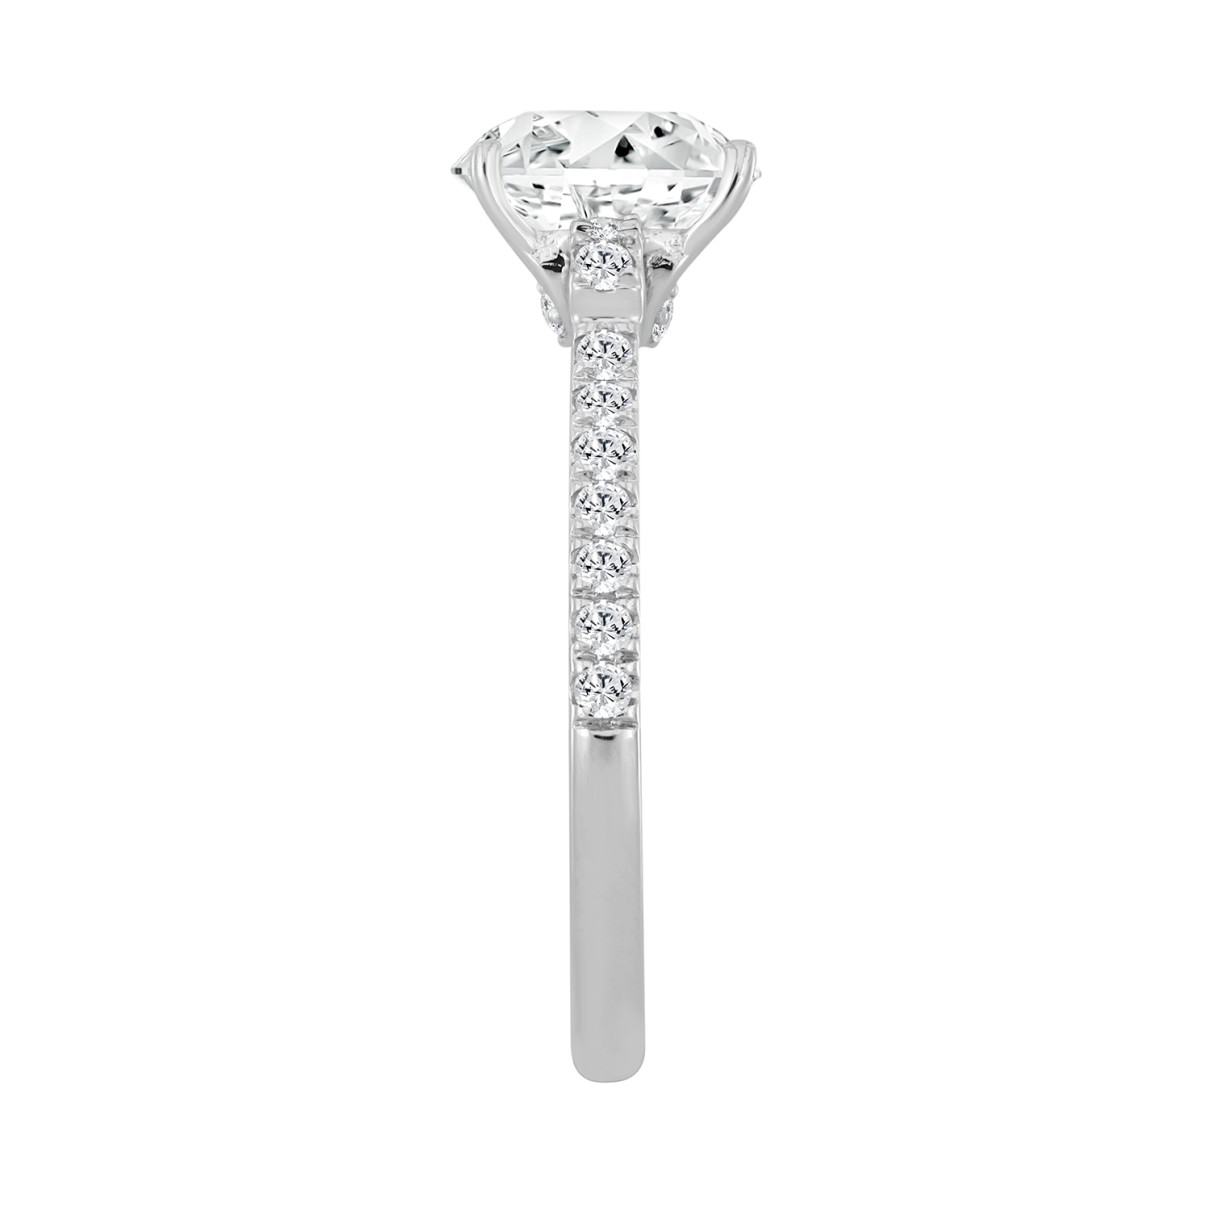 LADIES BRIDAL SET 1 1/2CT ROUND/OVAL DIAMOND 14K WHITE GOLD (CENTER STONE OVAL DIAMOND 1CT)